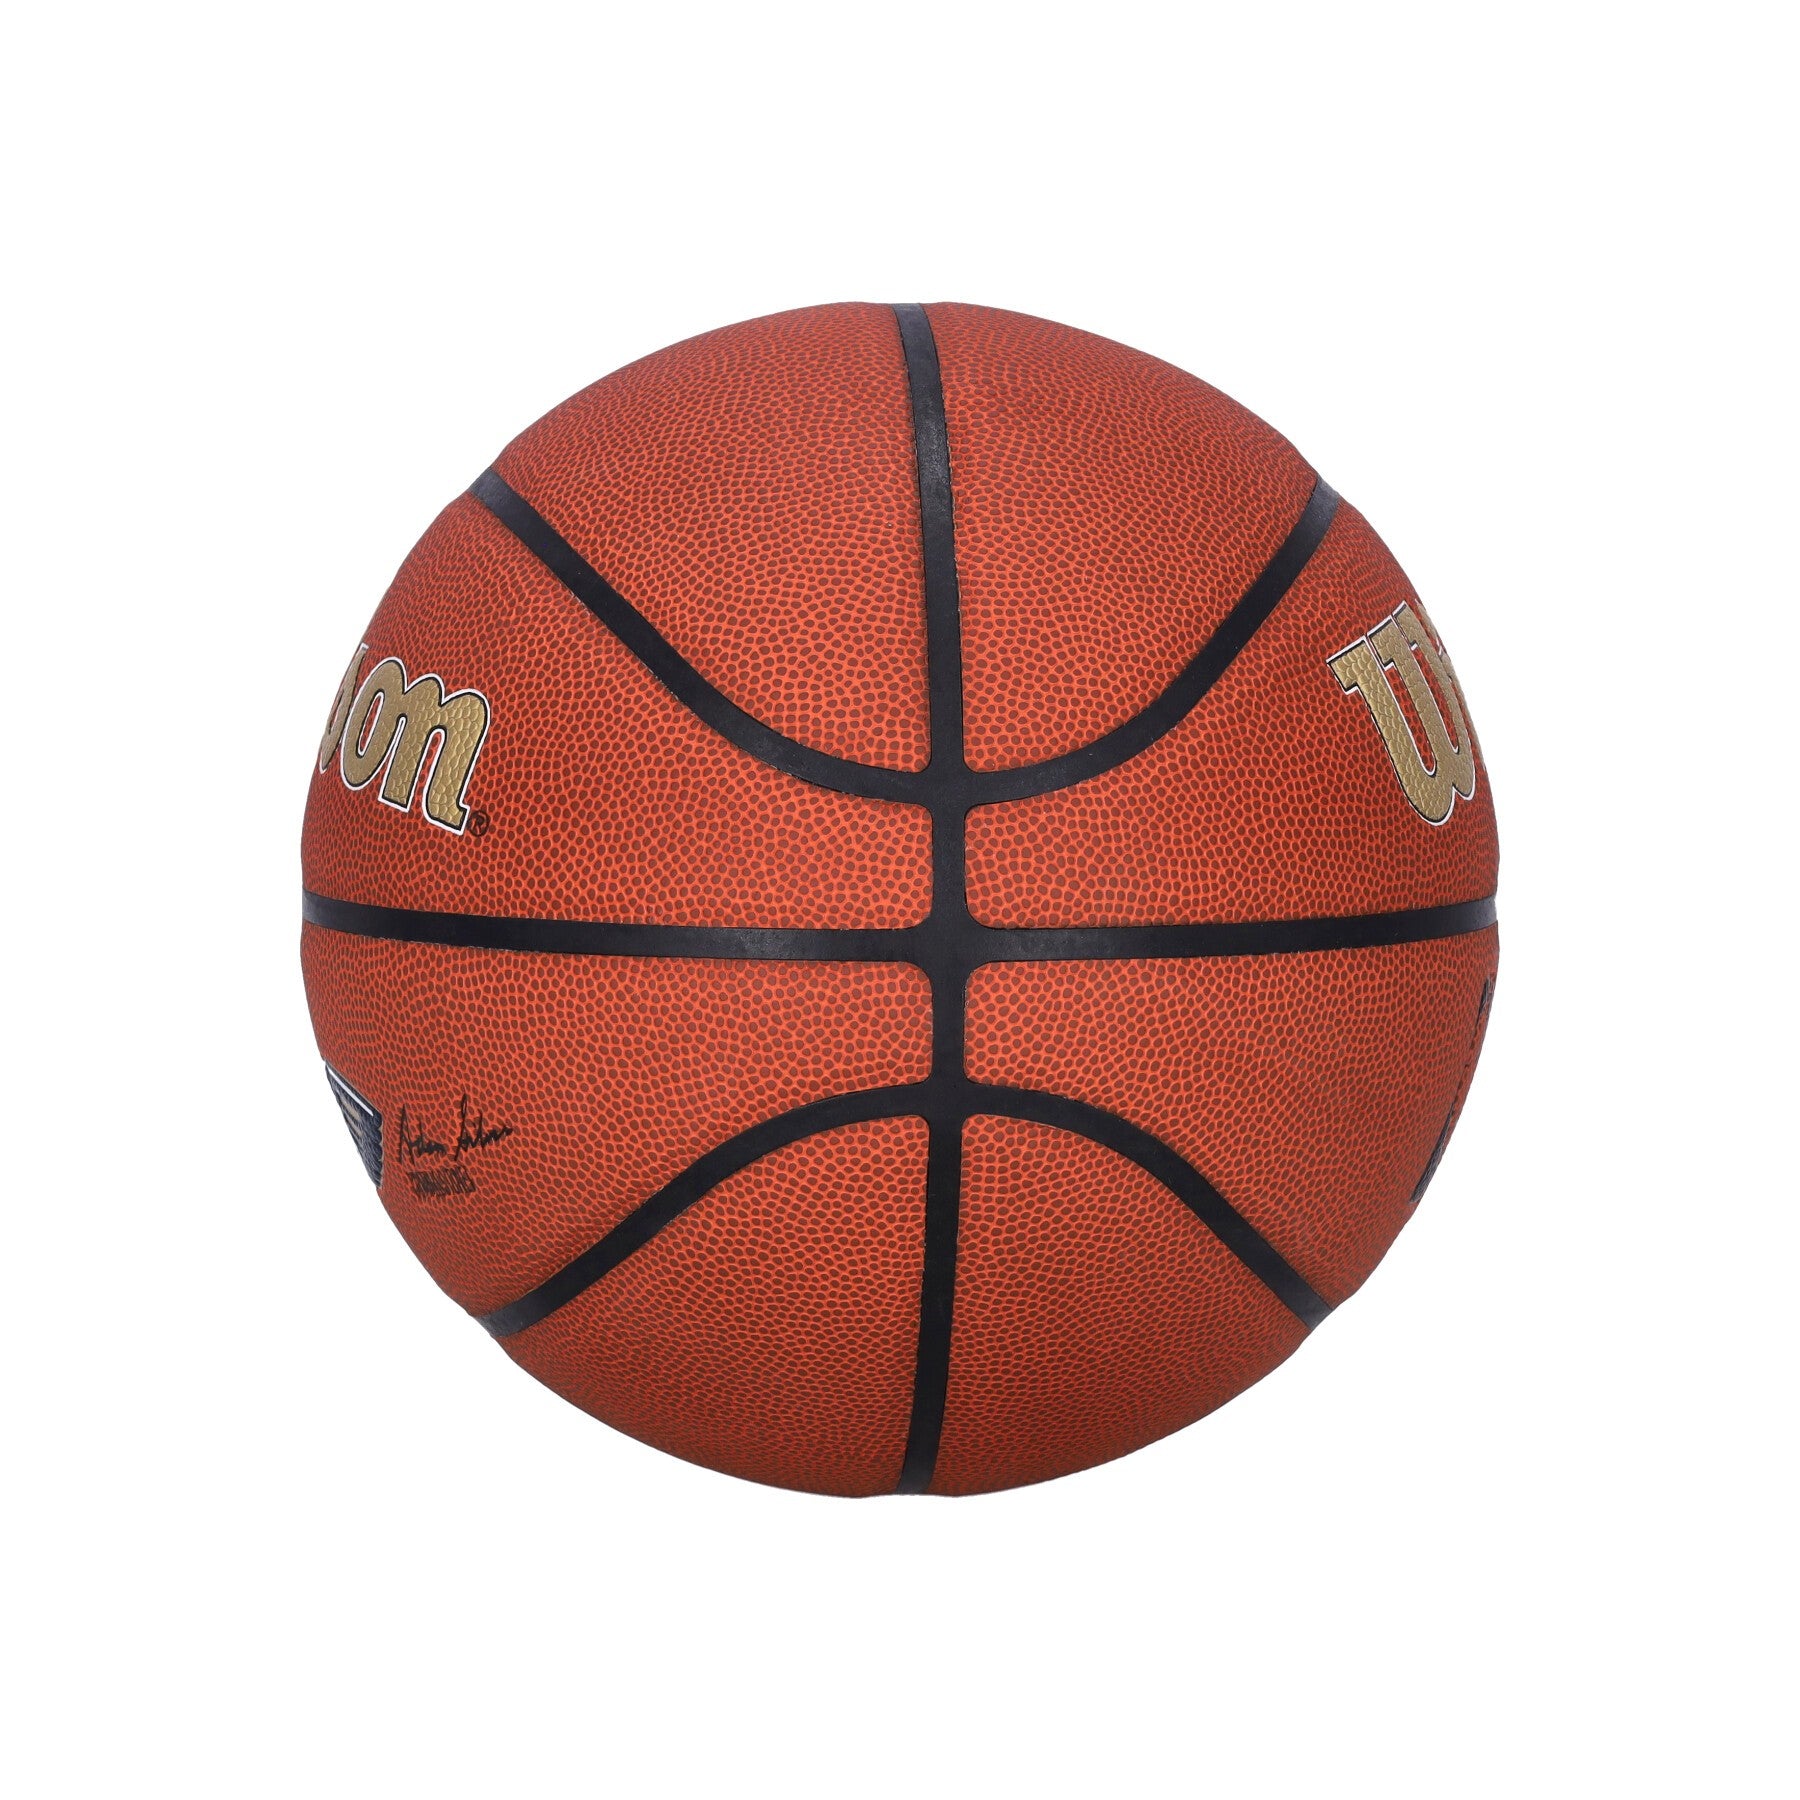 Pallone Uomo Nba Team Alliance Basketball Size 7 Neopel Brown/original Team Colors WTB3100XBBNO